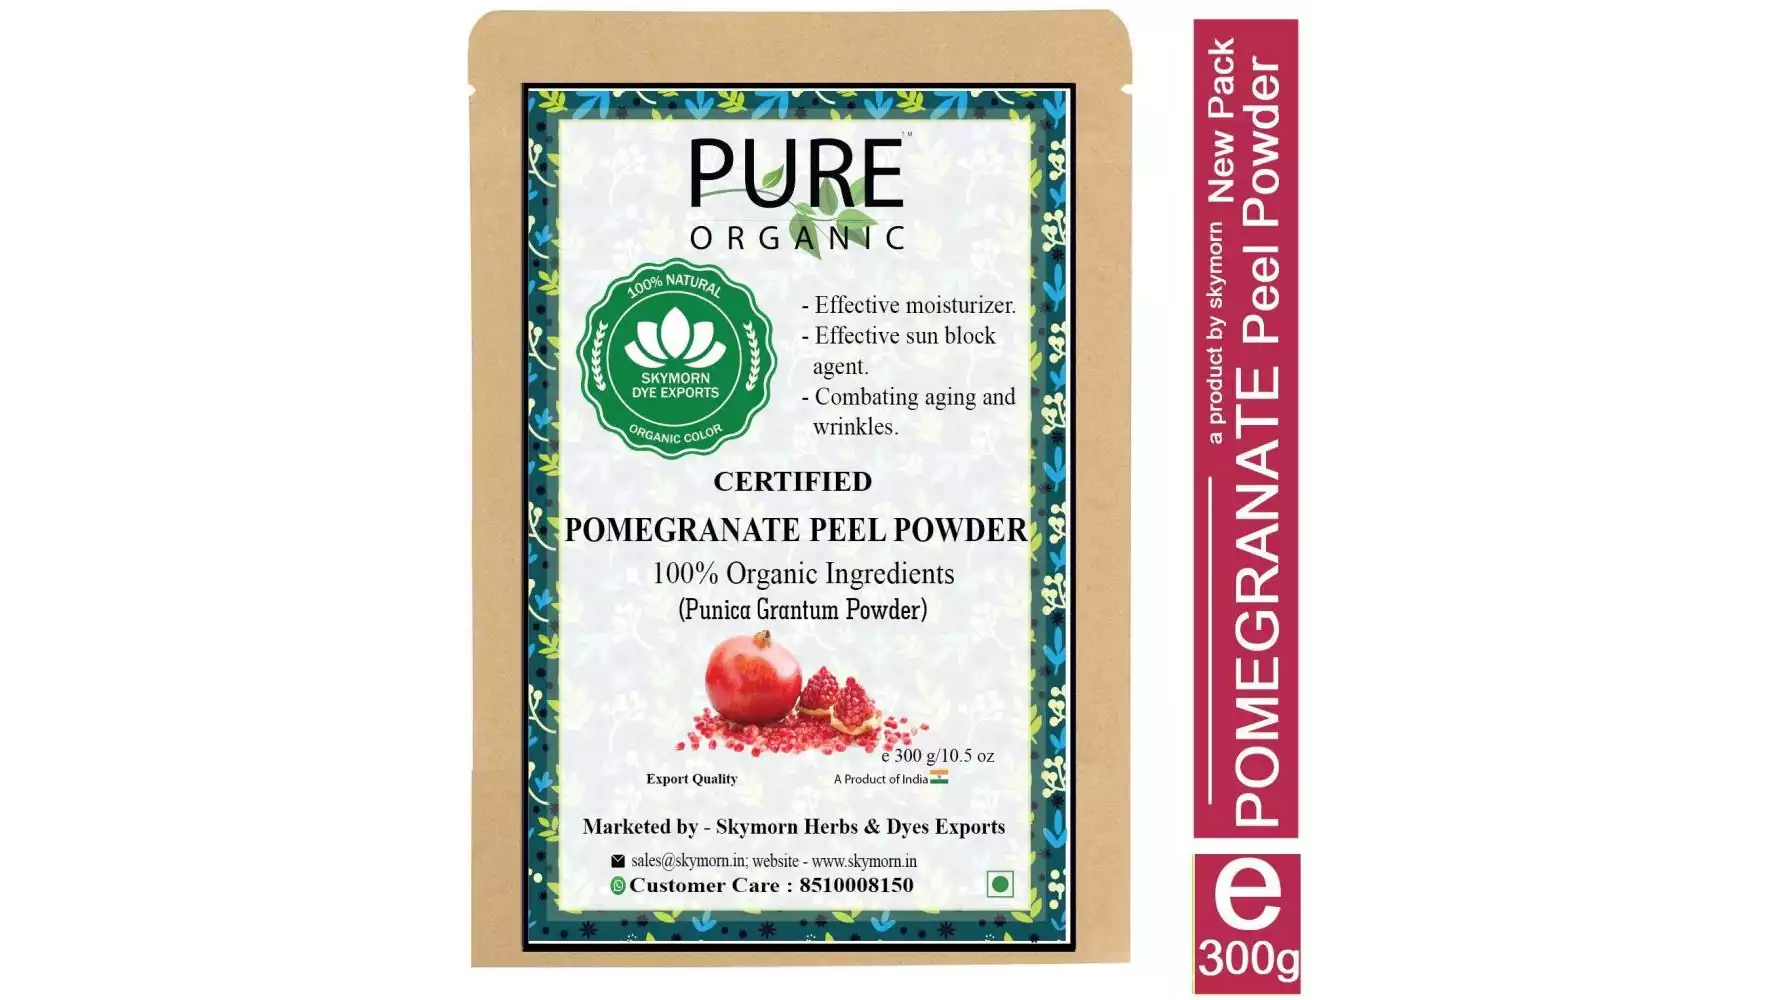 SkyMorn Premium Quality Pomegranate Peel Powder (300g)